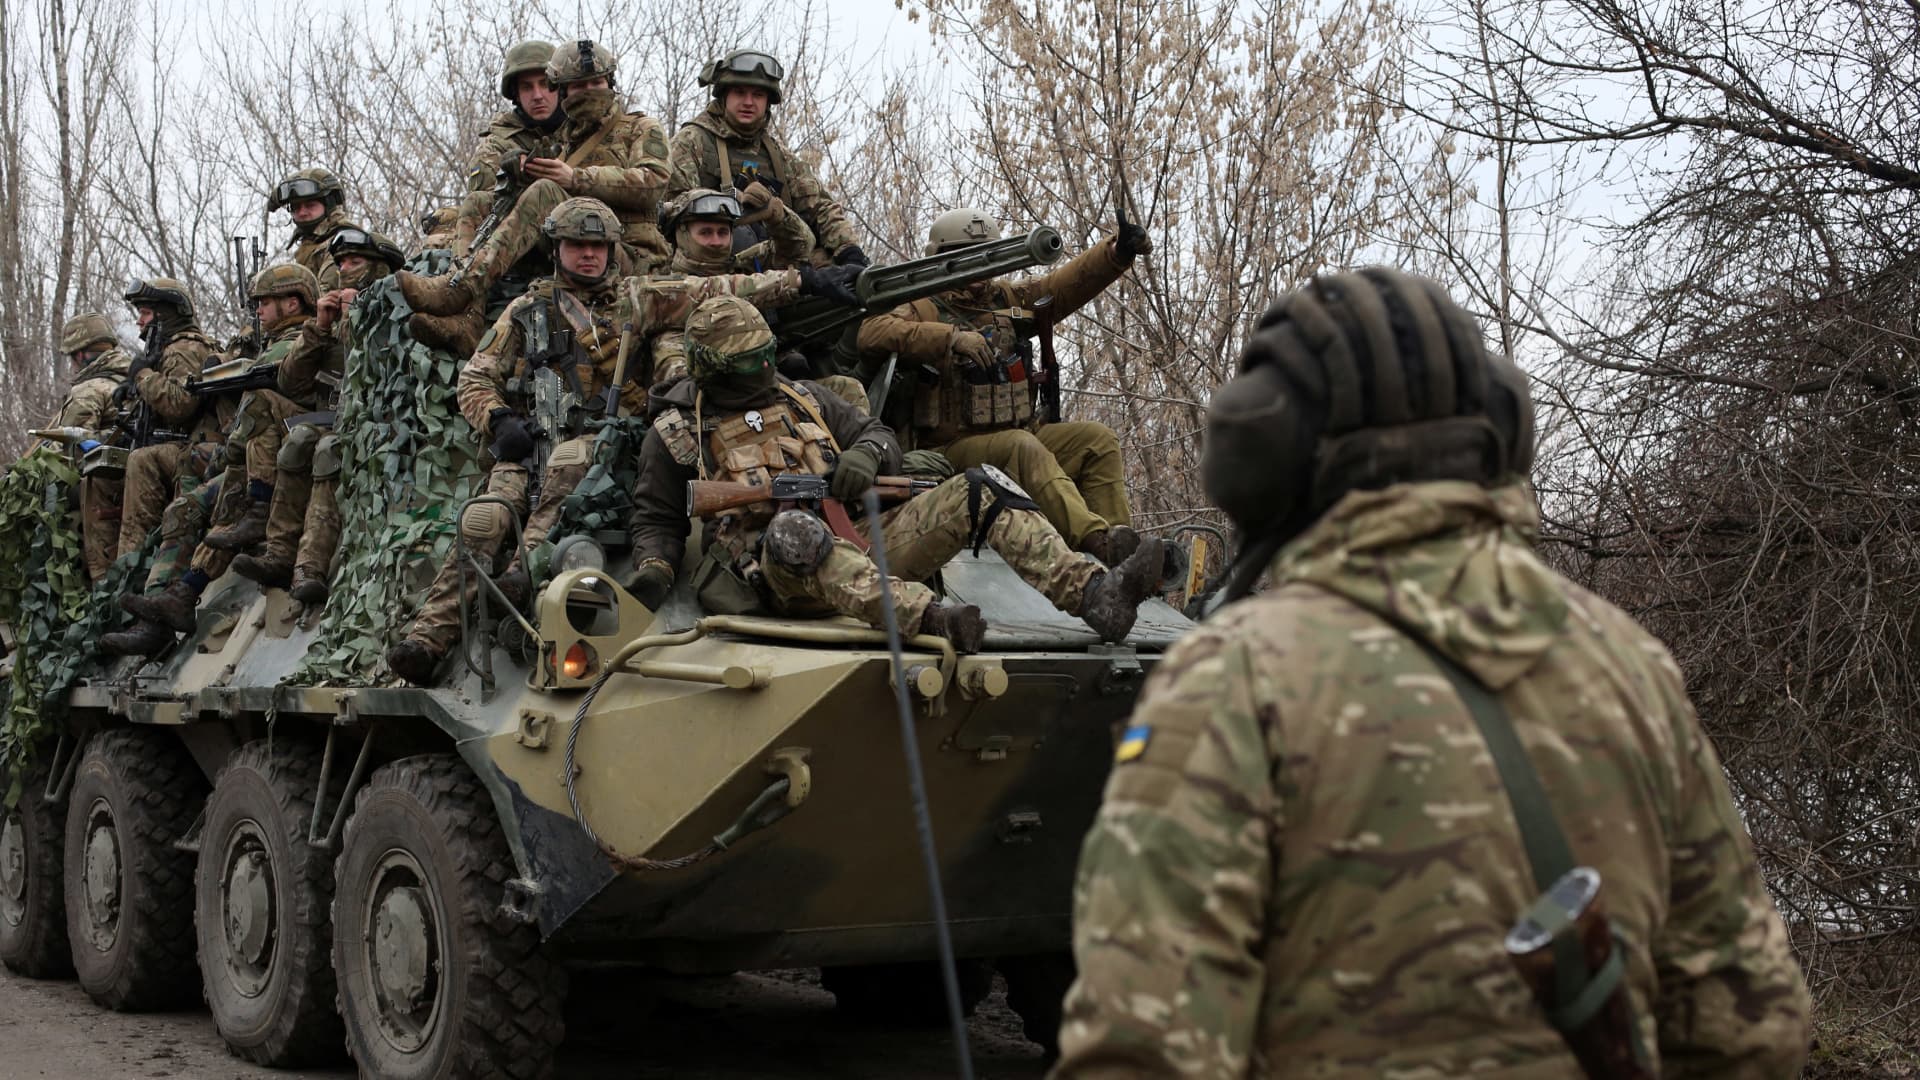 Ukrainian servicemen get ready to repel an attack in Ukraine's Lugansk region on February 24, 2022.